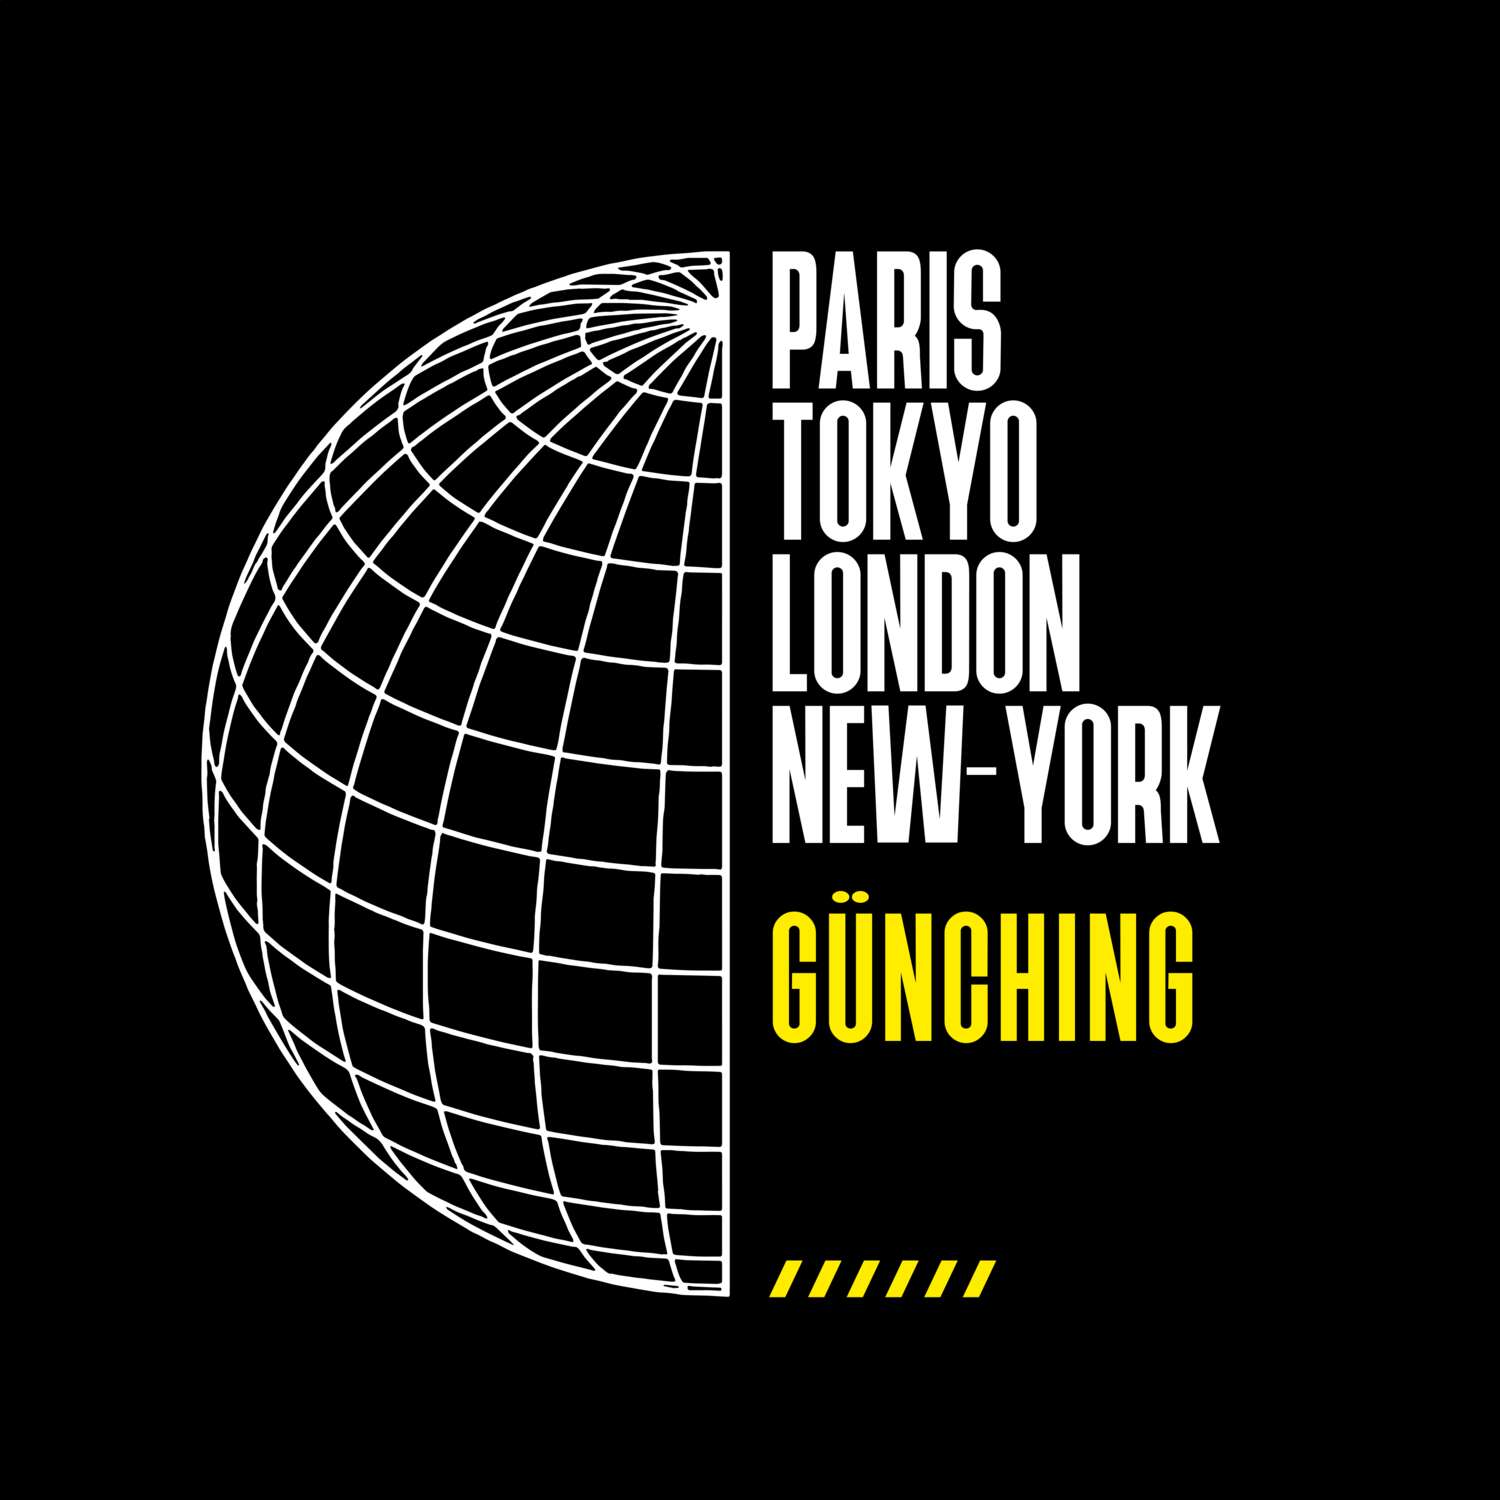 Günching T-Shirt »Paris Tokyo London«